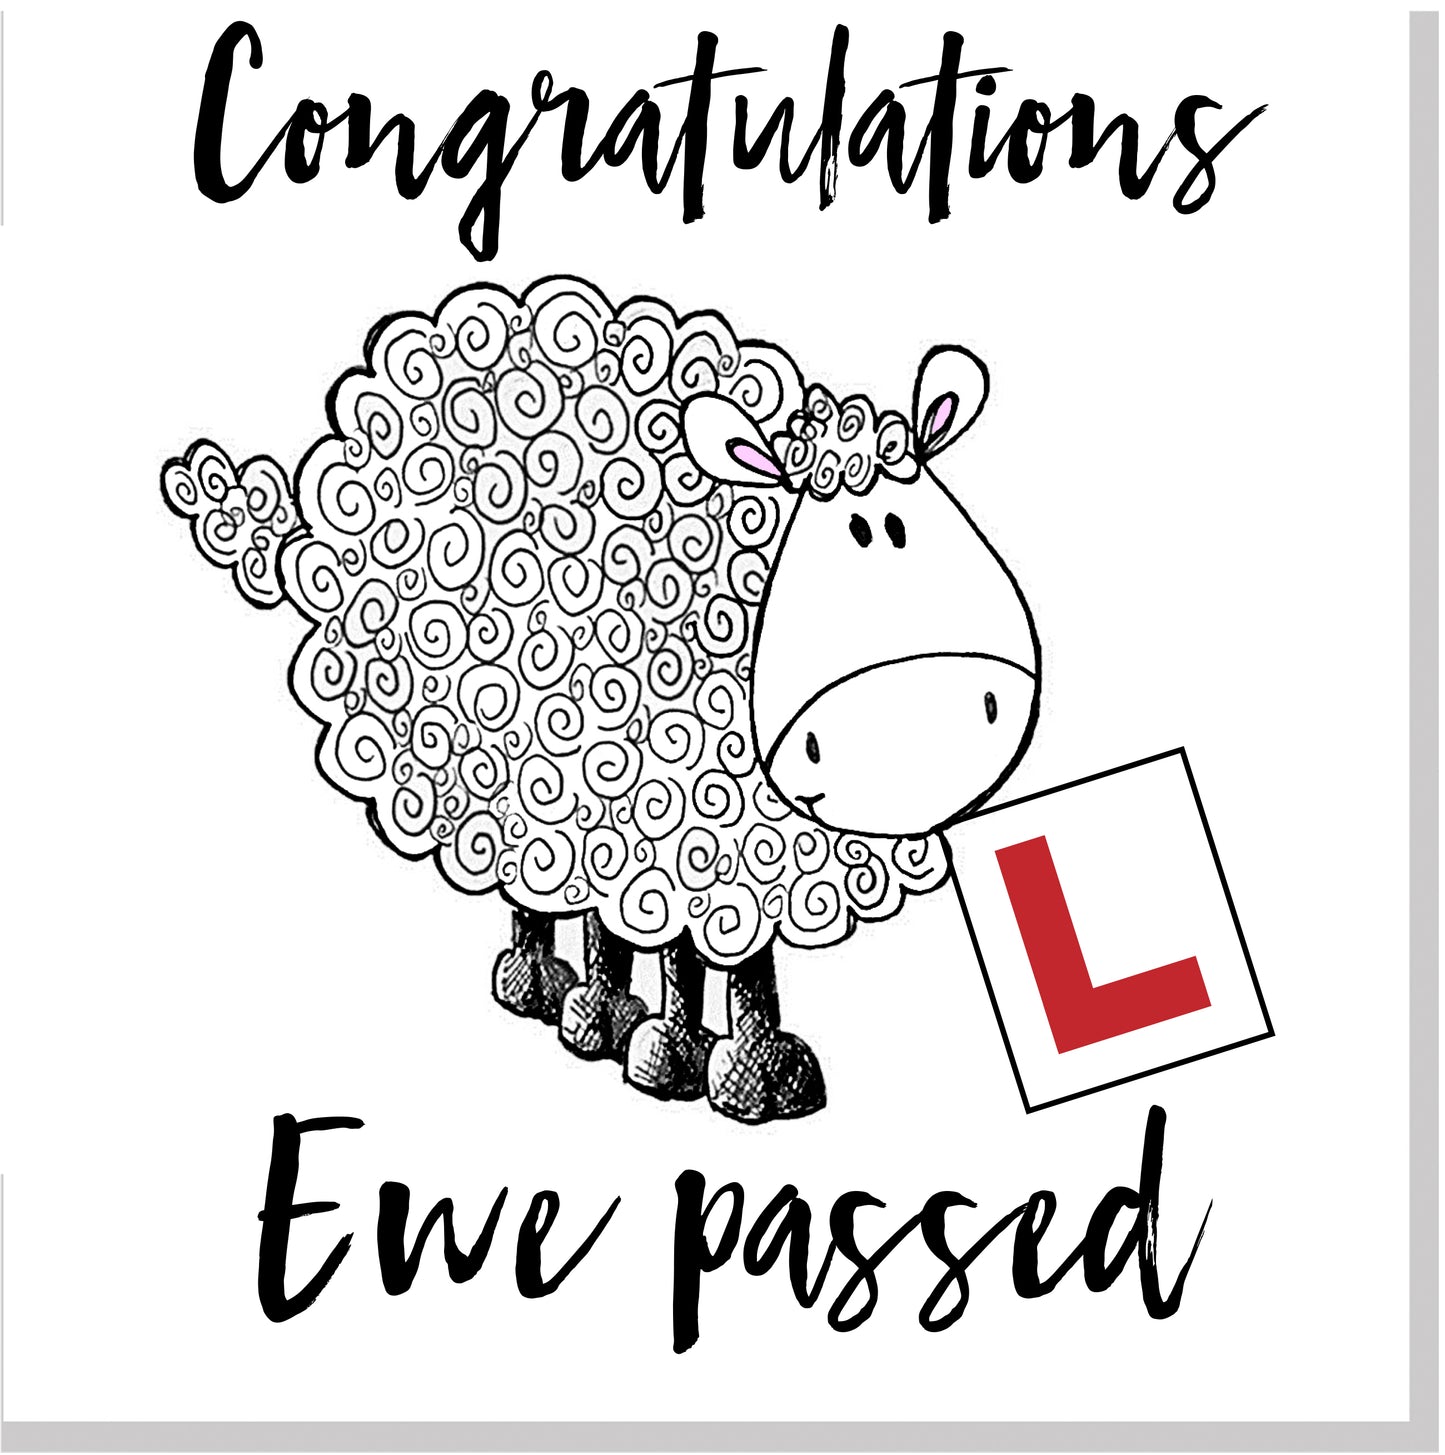 Congratulations ewe passed square card